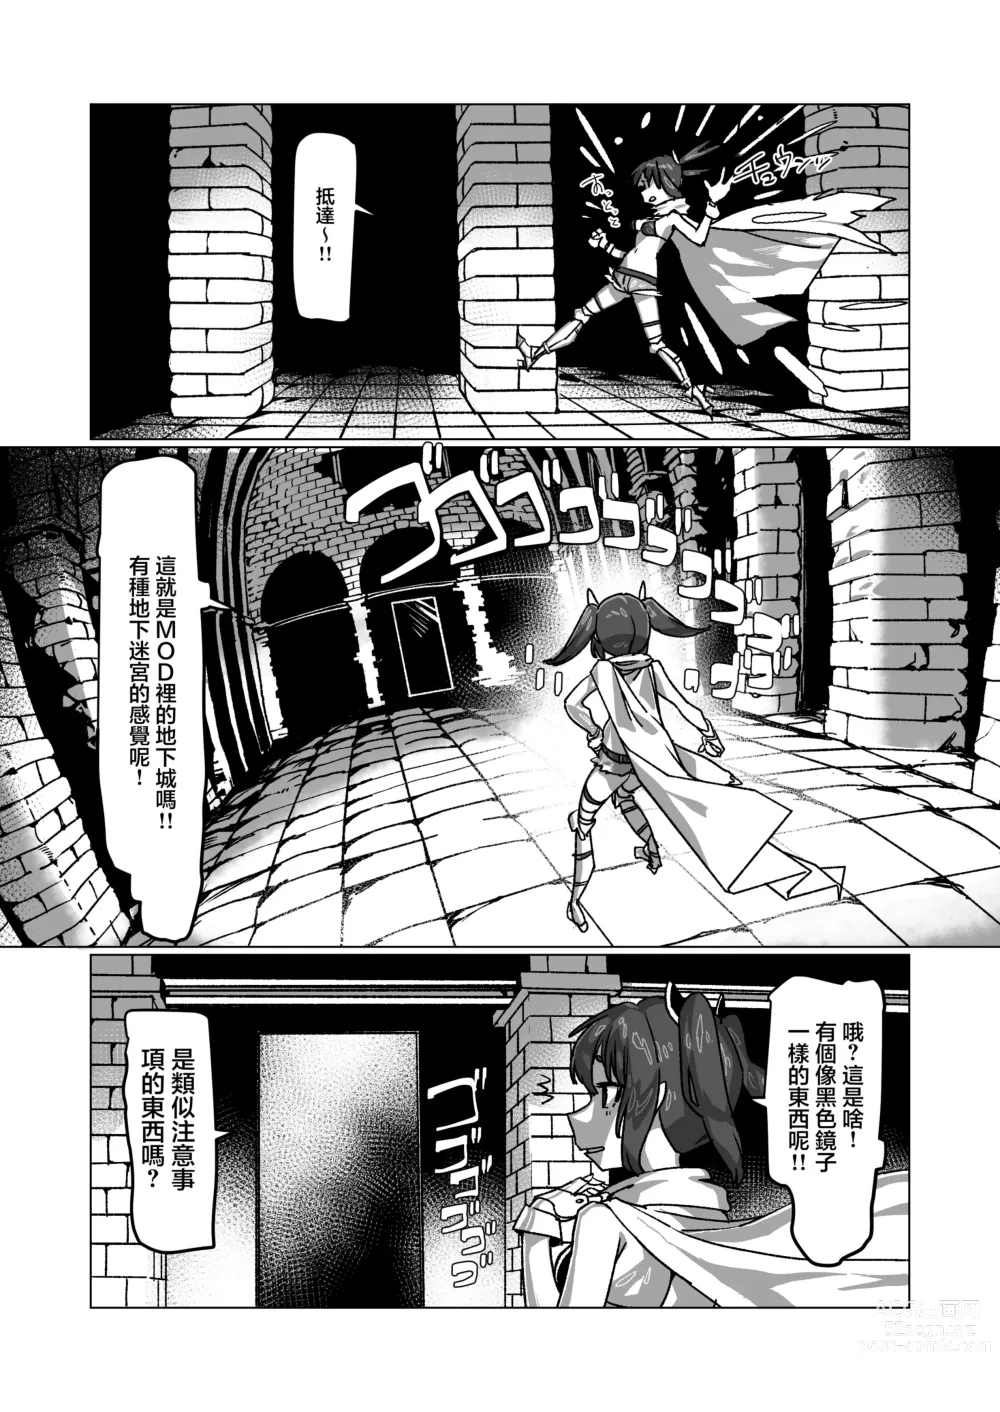 Page 5 of doujinshi 以為自己是東北切蒲英的切蒲英的完全潛行VR地下城